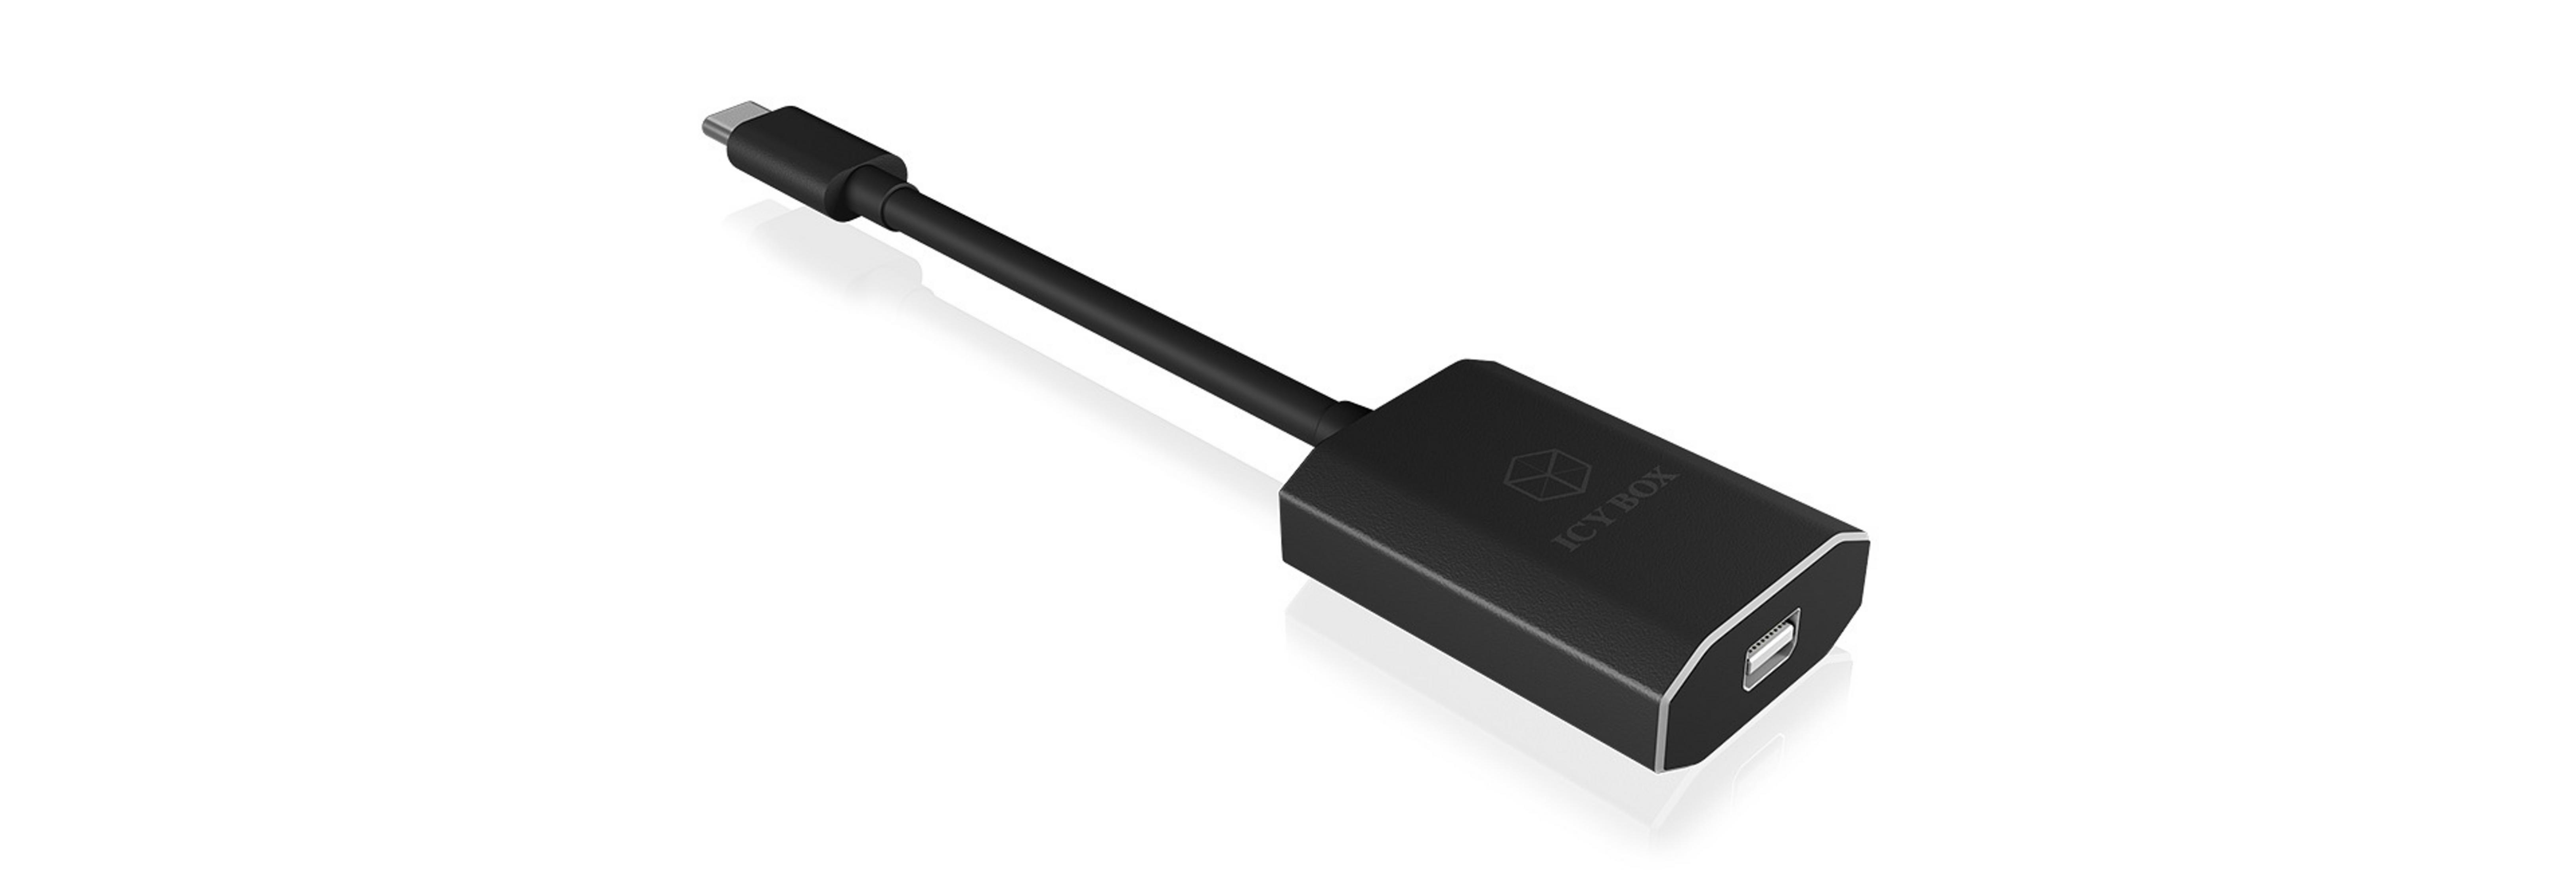 ZU MINI IB-AD550-C RAIDSONIC DISPLAYPORT Adapter, USB Schwarz TYPE-C